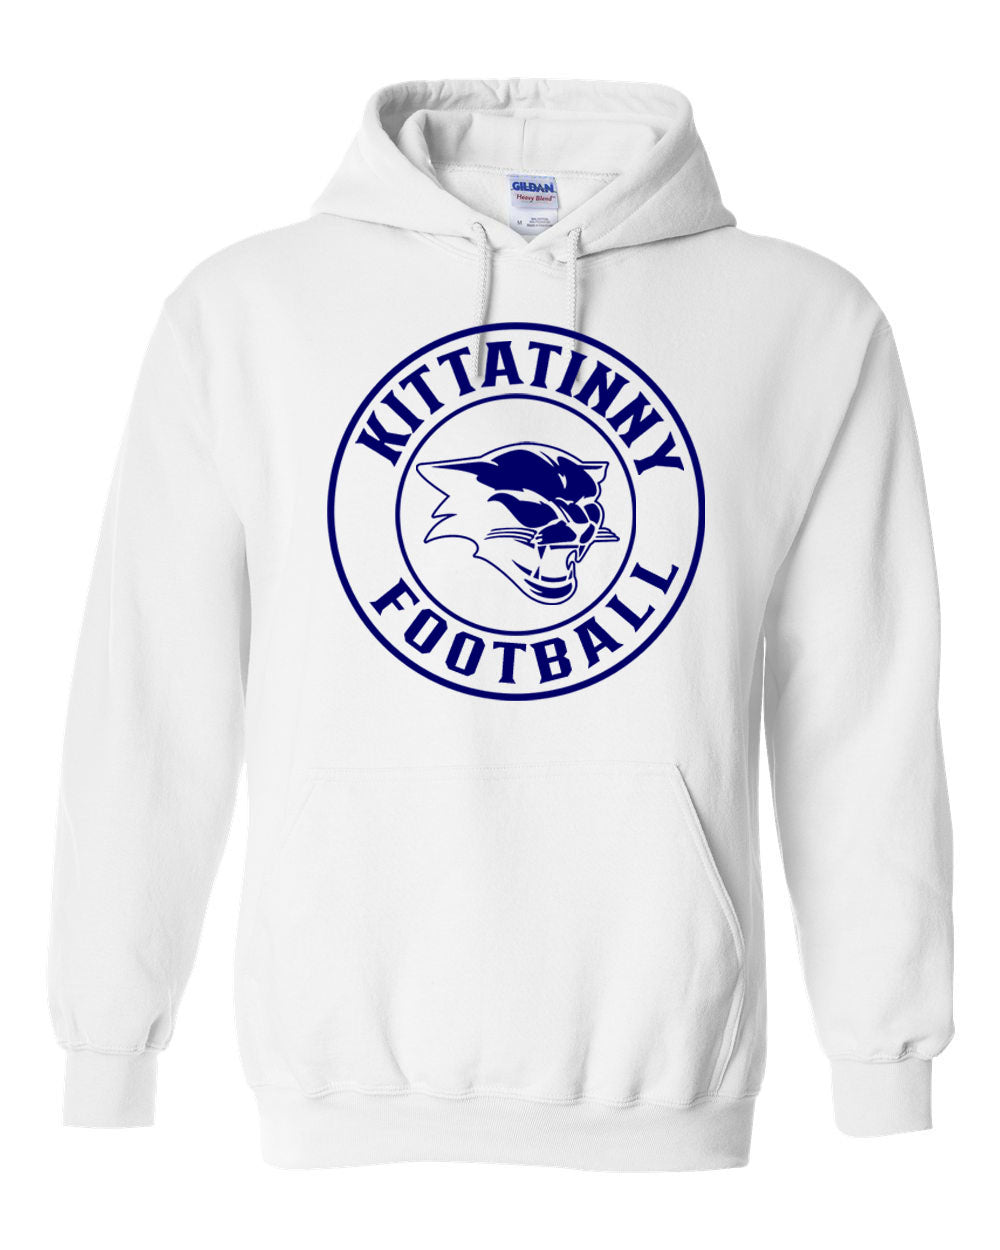 Kittatinny Football Design 5 Hooded Sweatshirt